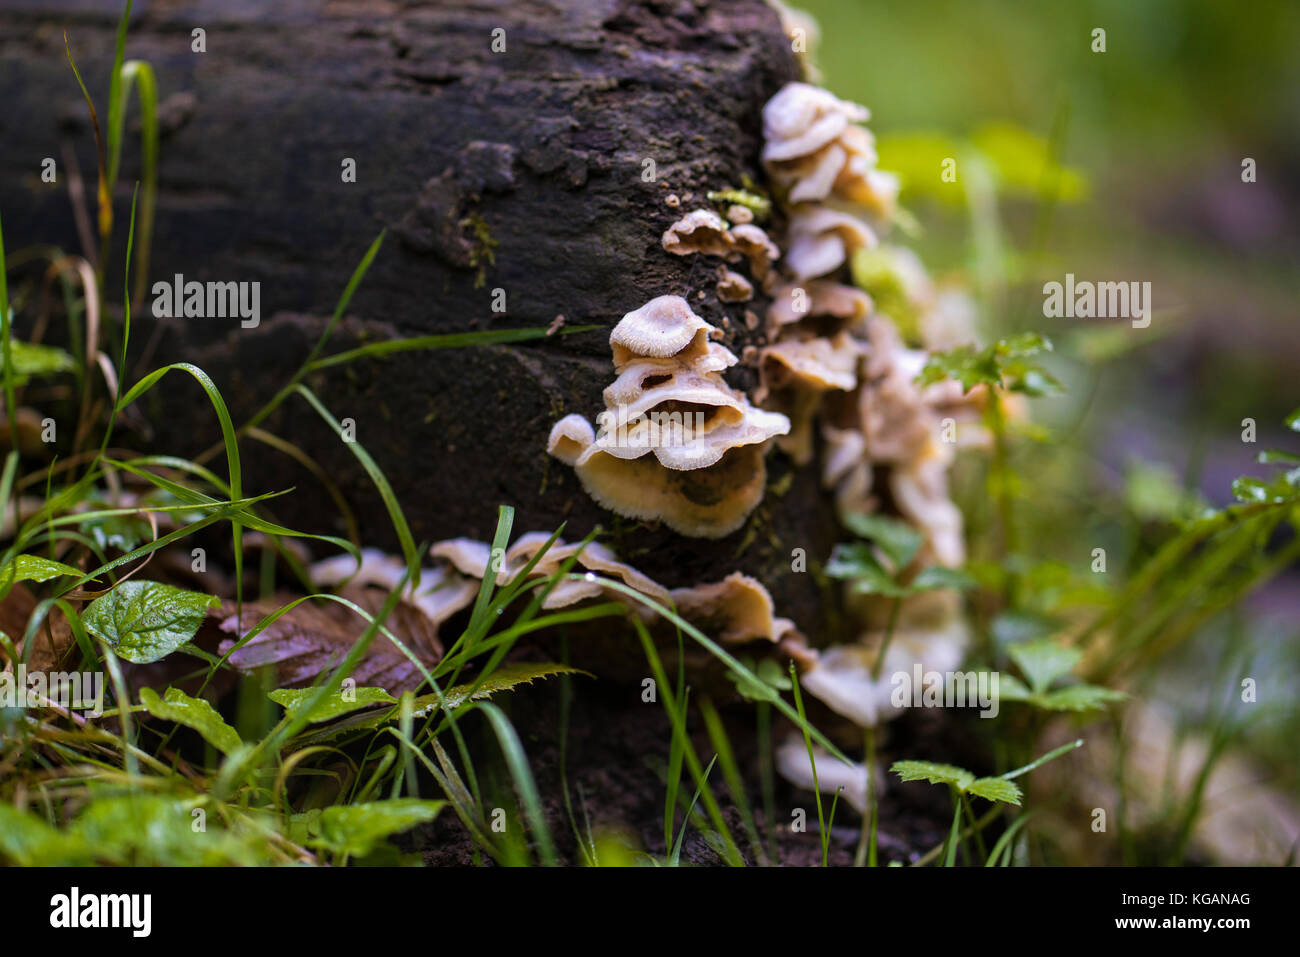 Parasite mushroom colony growing on a tree stump Stock Photo